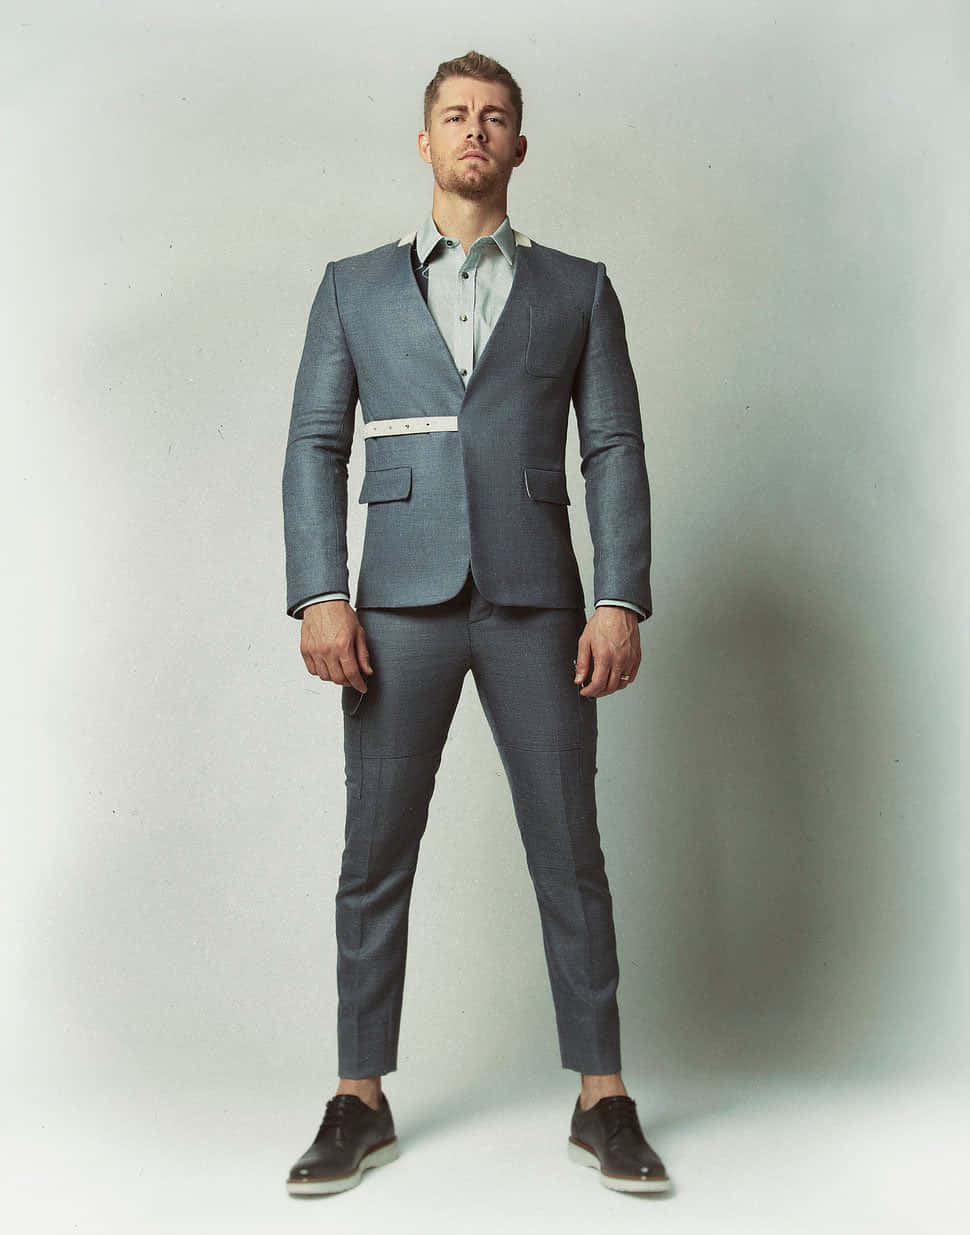 Confident Manin Modern Suit Wallpaper